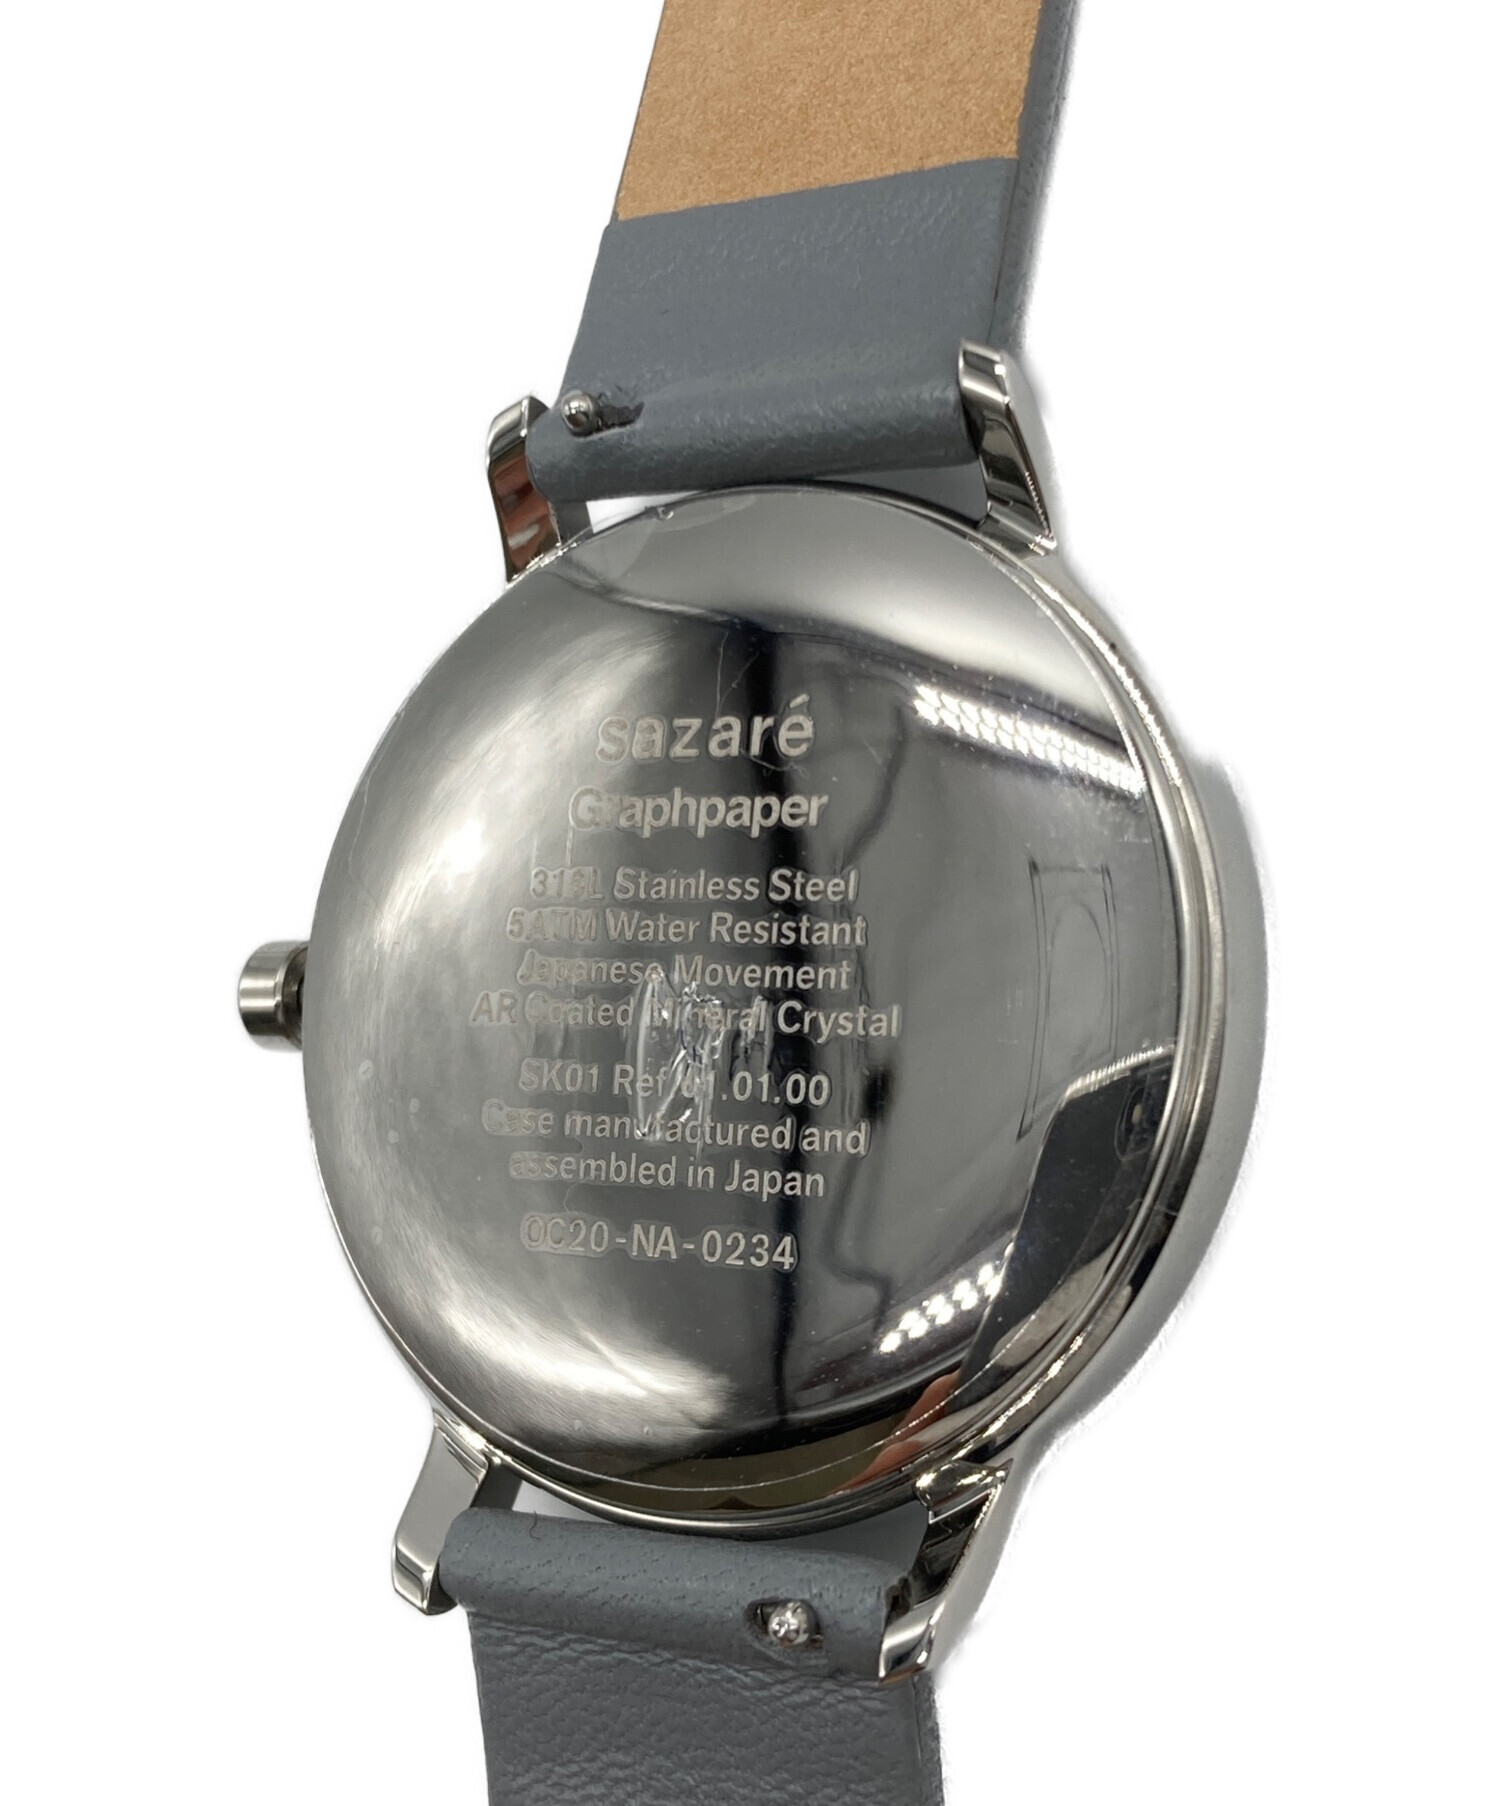 sazare for Graphpaper (サザレ × グラフペーパー) SS SILVER MIRROR FINISH 腕時計